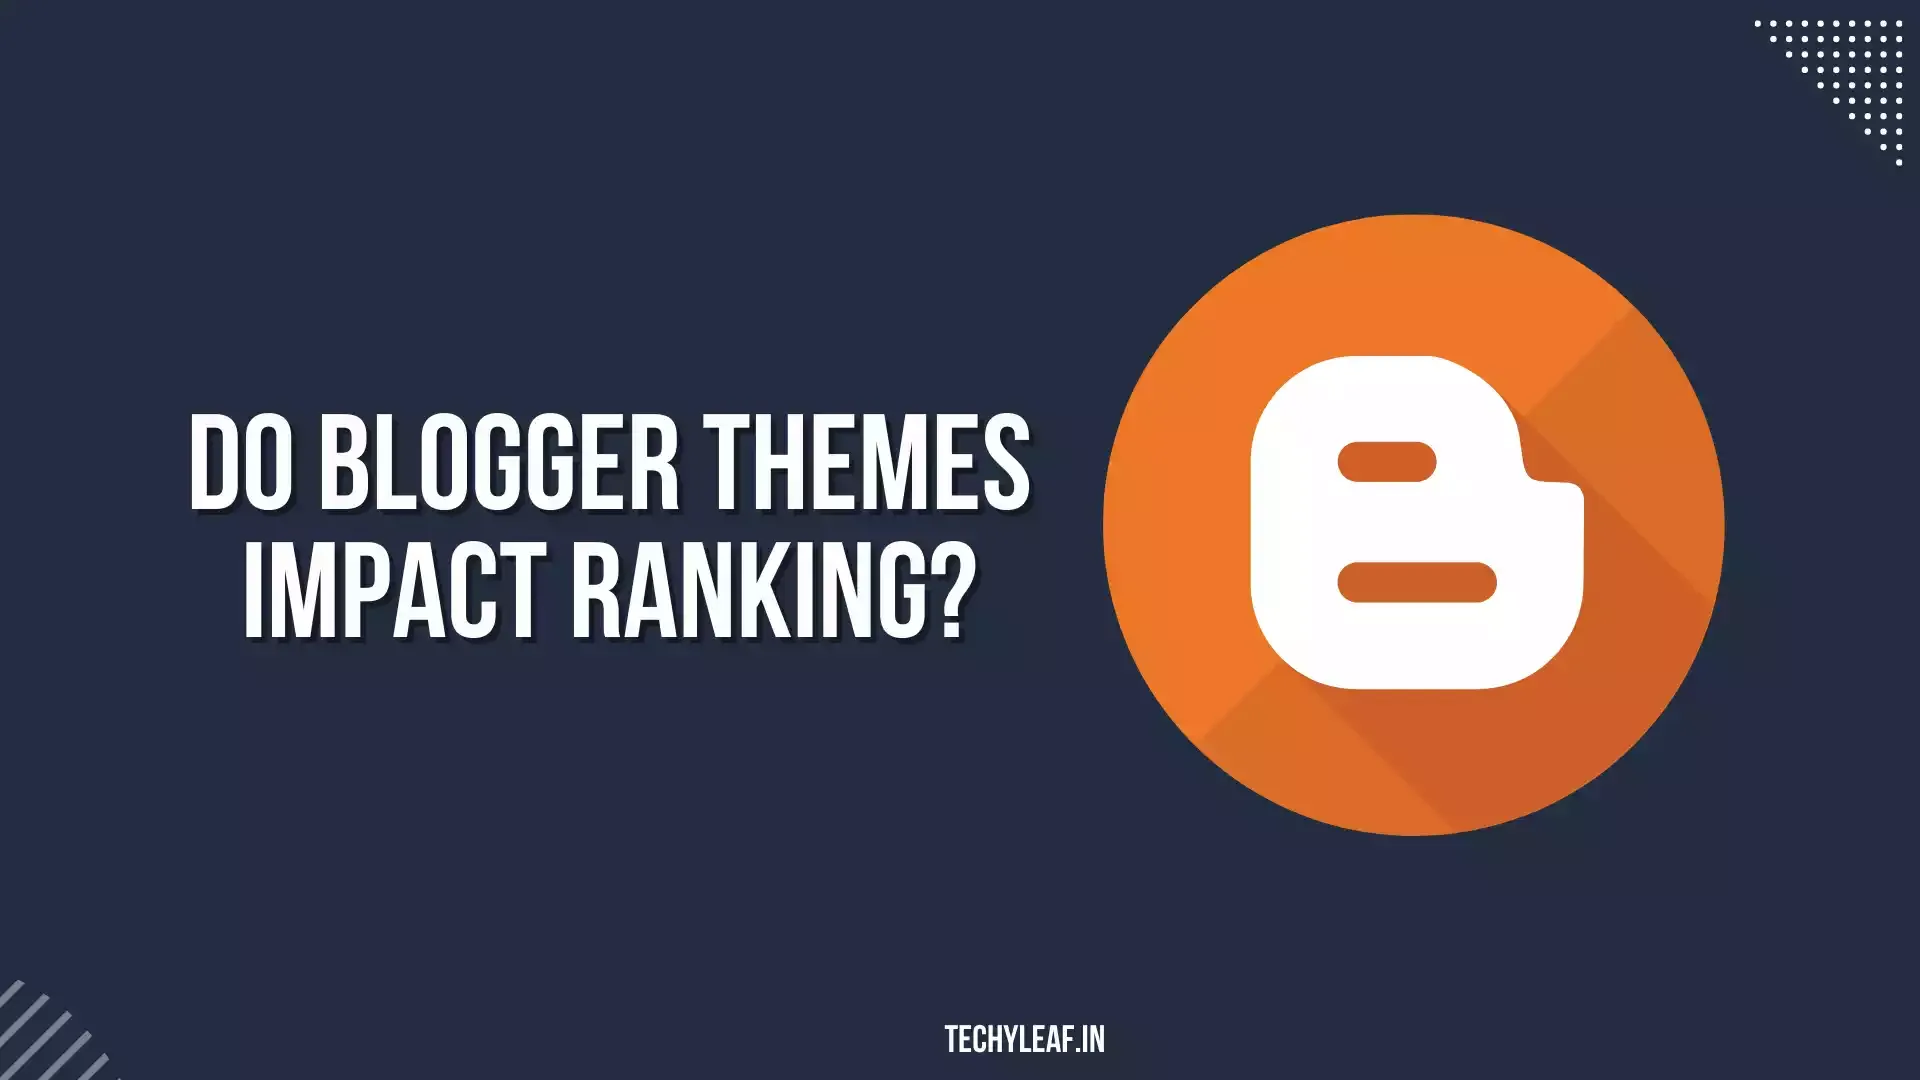 Do Blogger themes impact ranking?